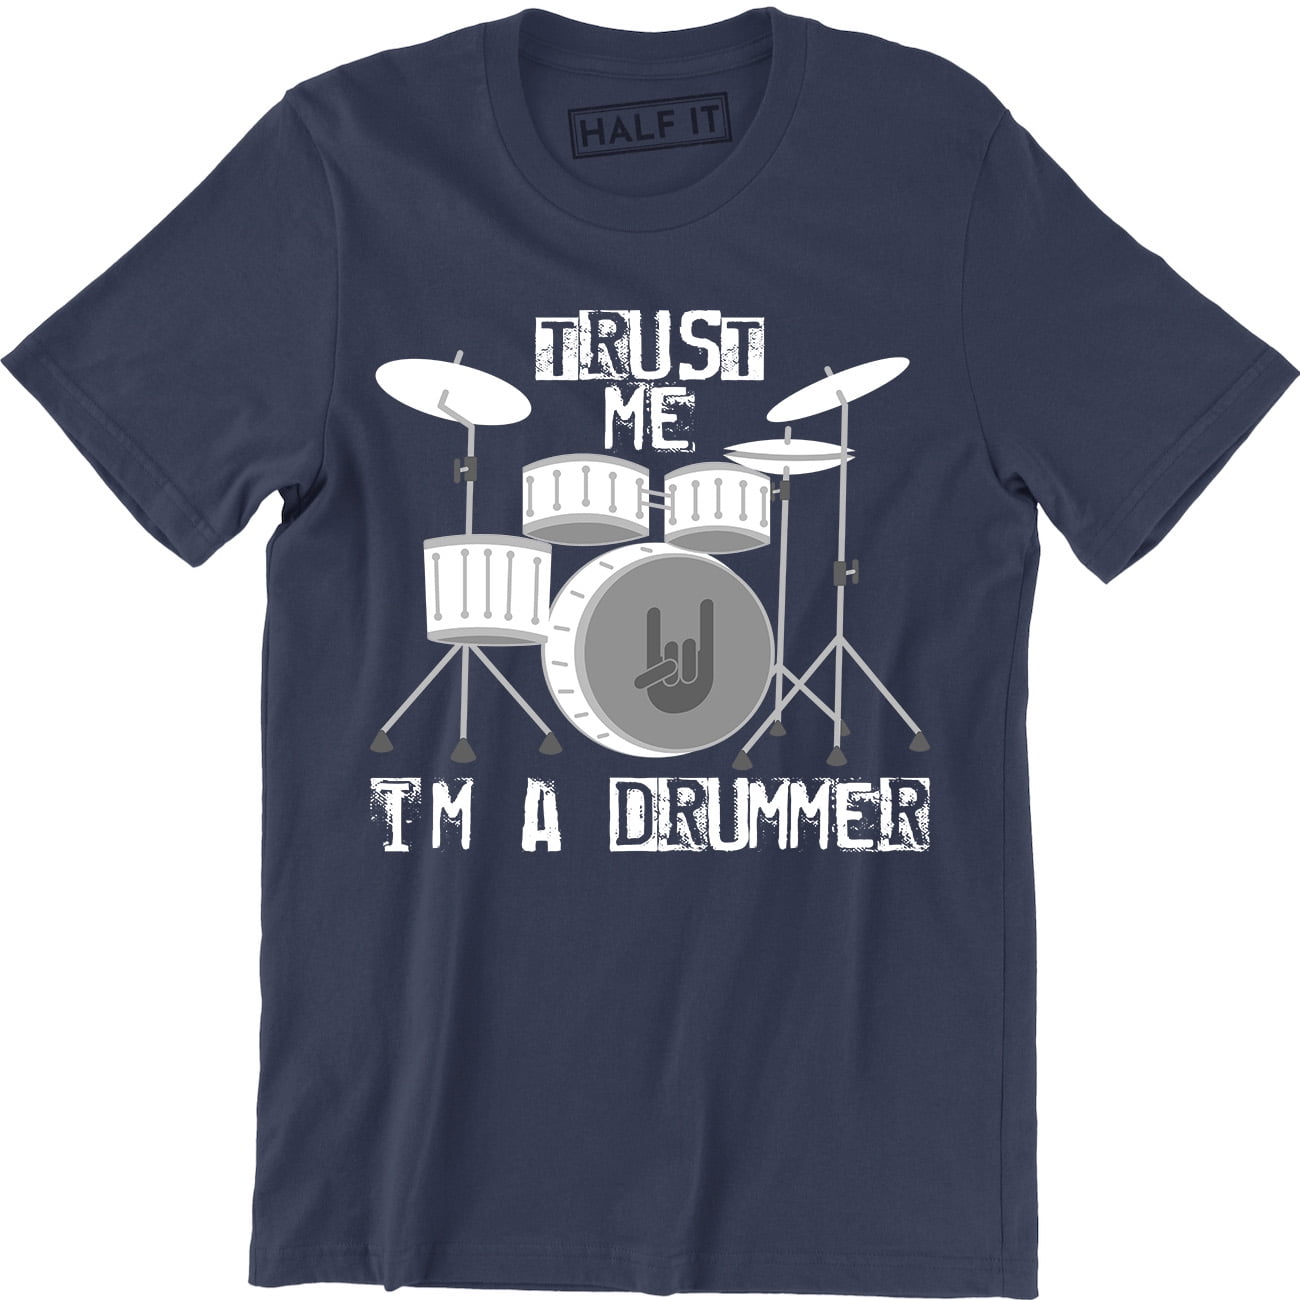 Boys Girls Kids Musician Band Music Clothing Unisex Kids Clothing Tops & Tees T-shirts Graphic Tees Trust Me I'm A Drummer Organic Cotton T-Shirt 